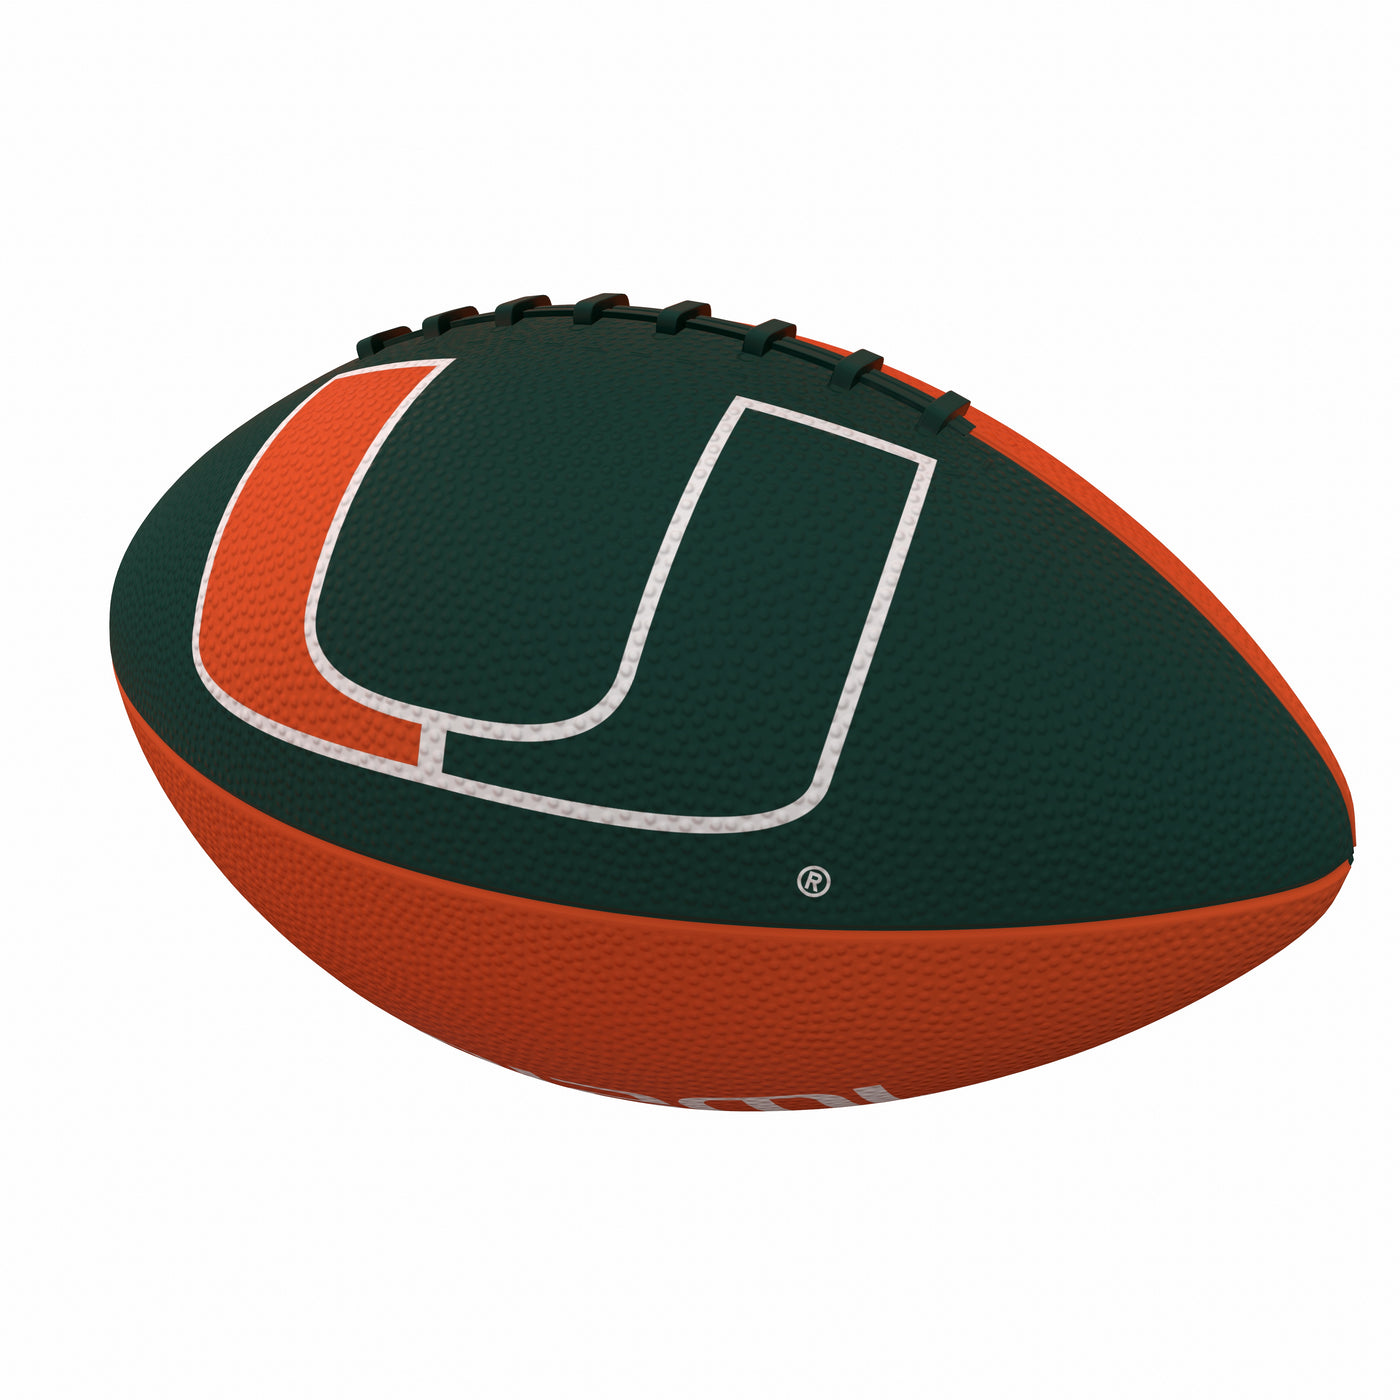 Miami Pinwheel Logo Junior Size Rubber Football